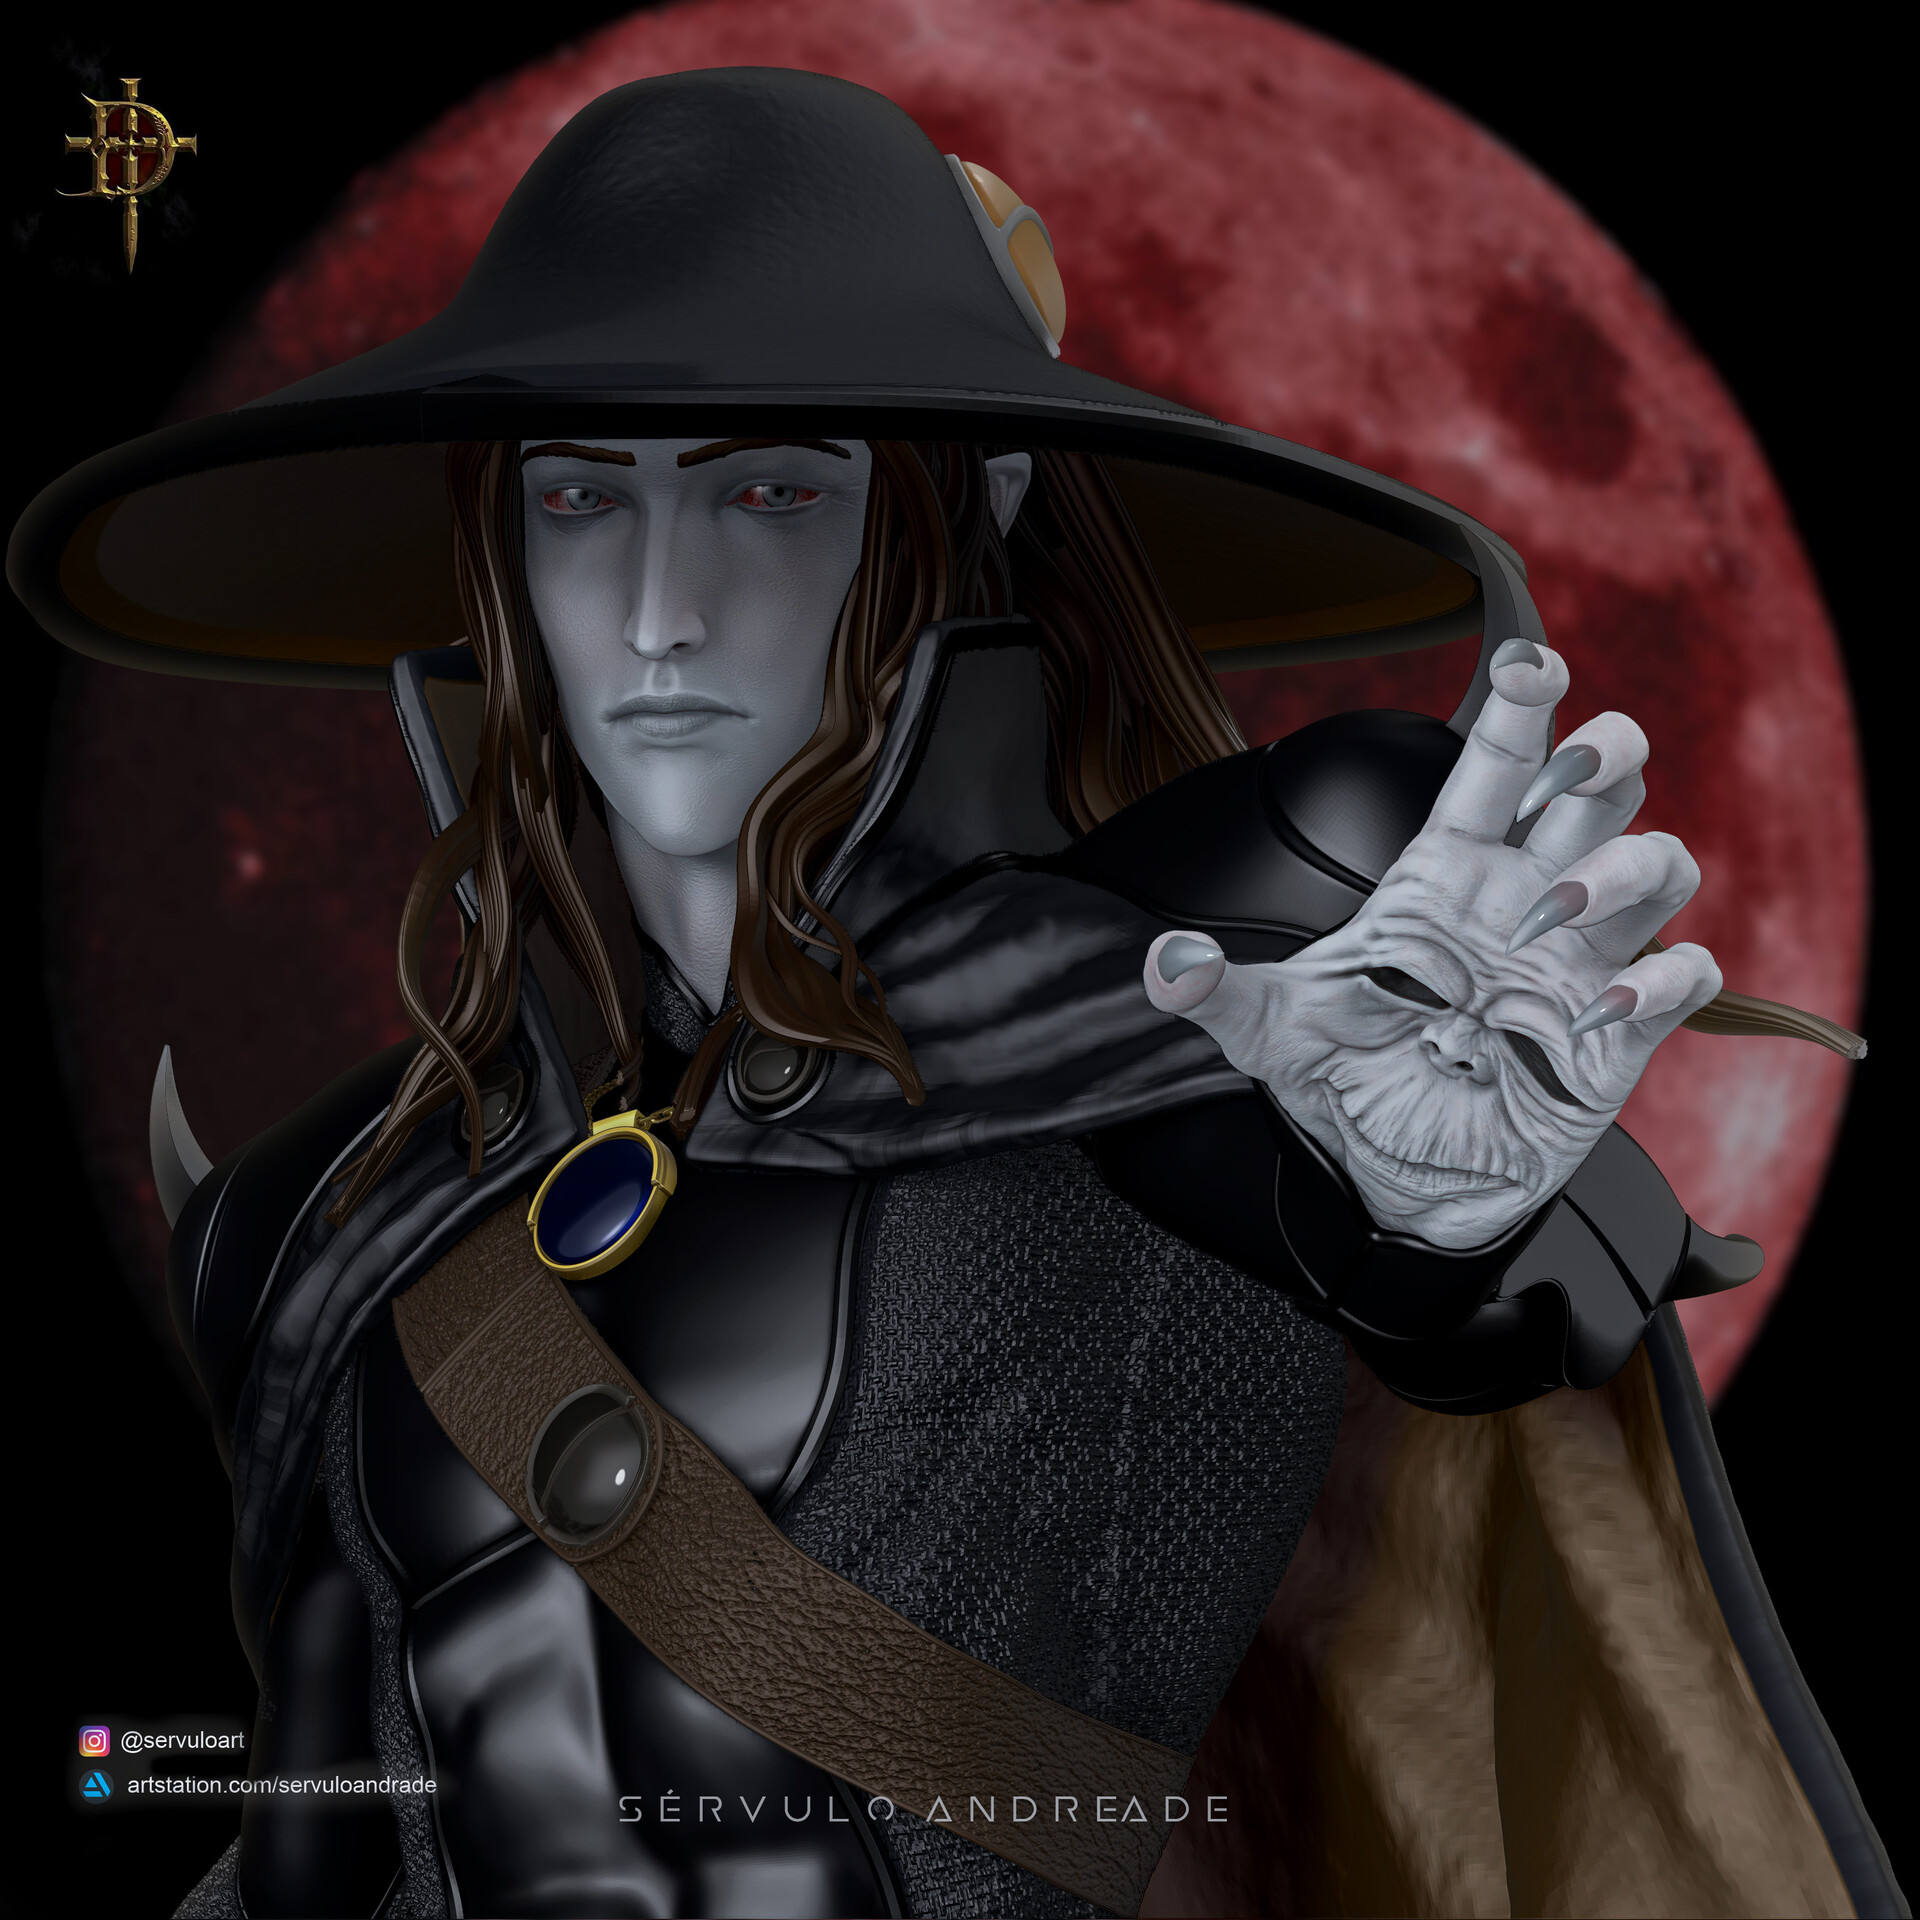 ArtStation - Vampire Hunter D：Bloodlust